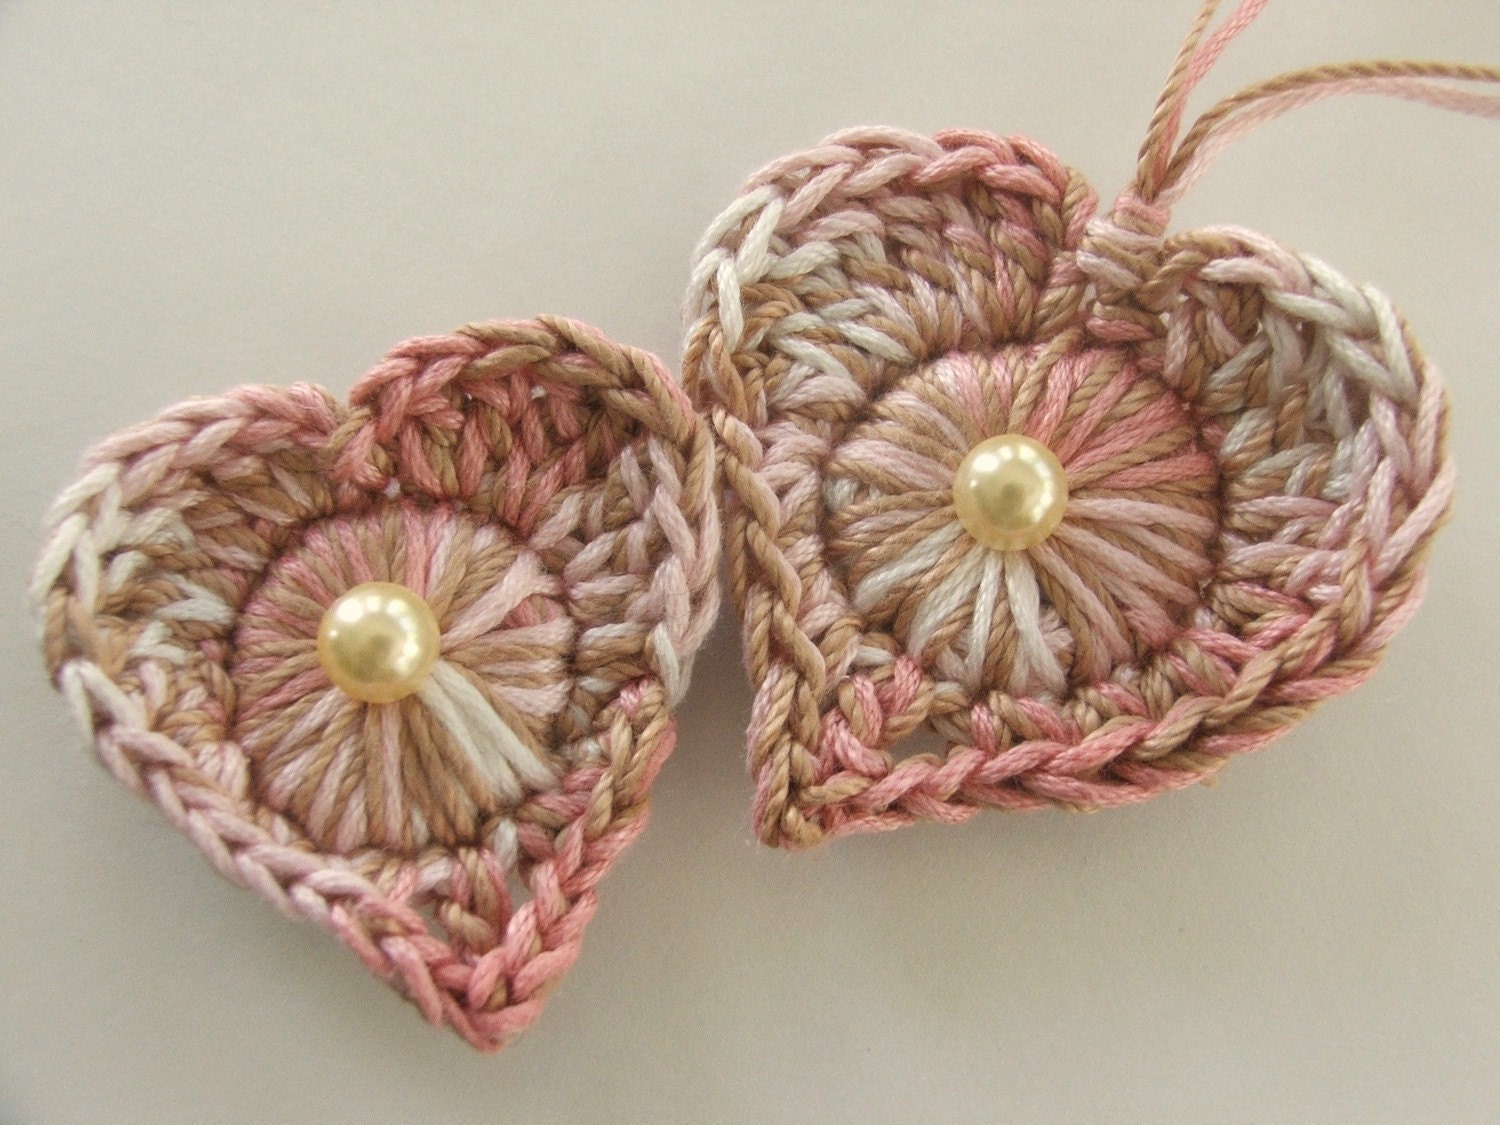 40% off Single Pattern - Delightful Easy Crocheted Heart and Diamond